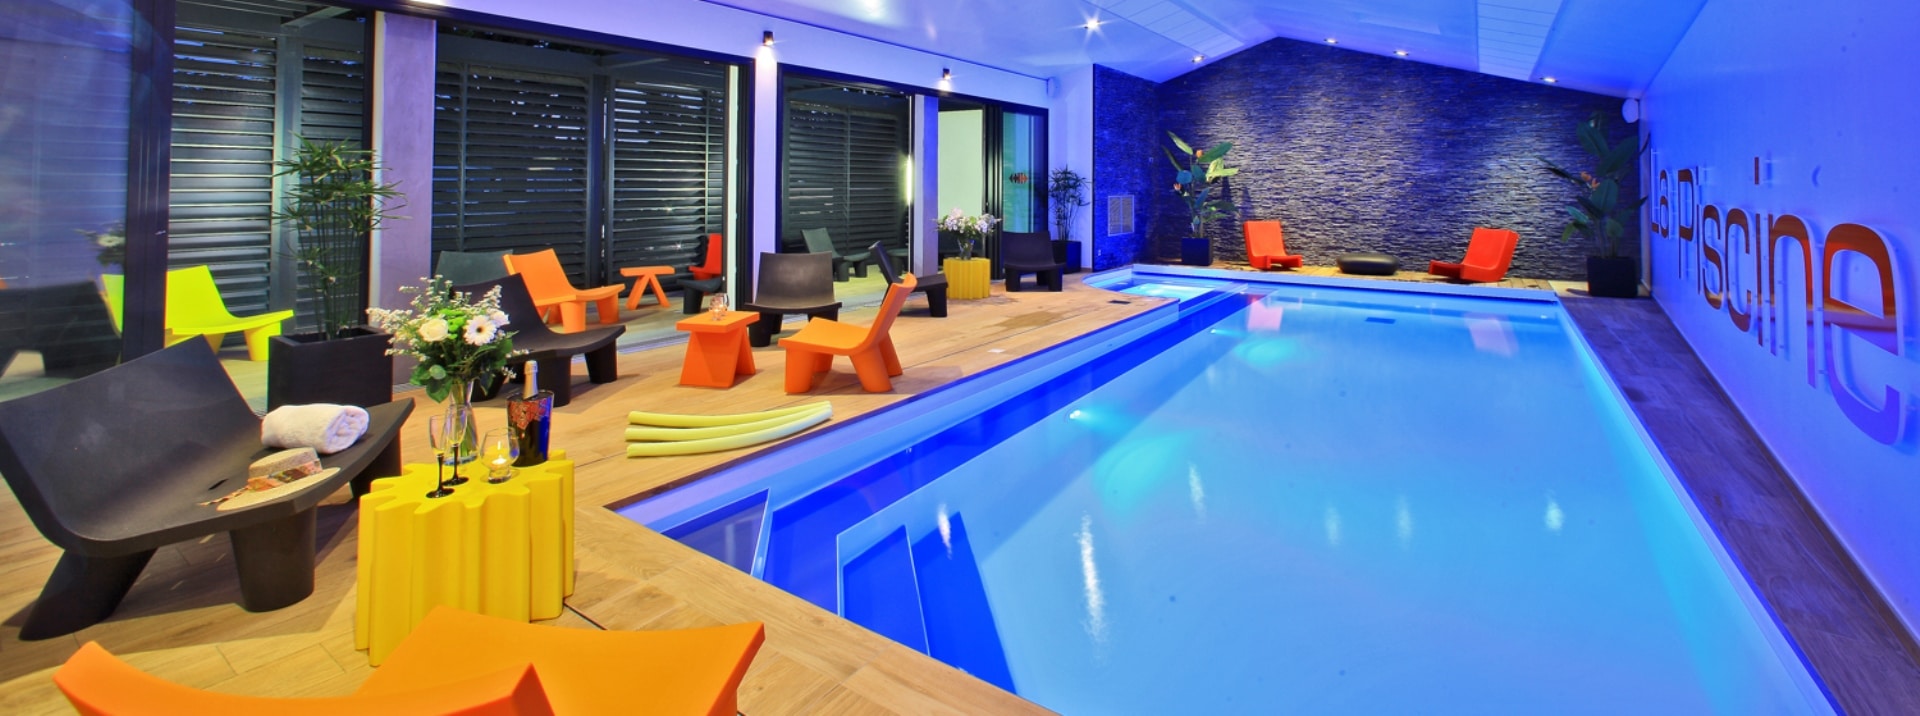 hotel noirmoutier piscine